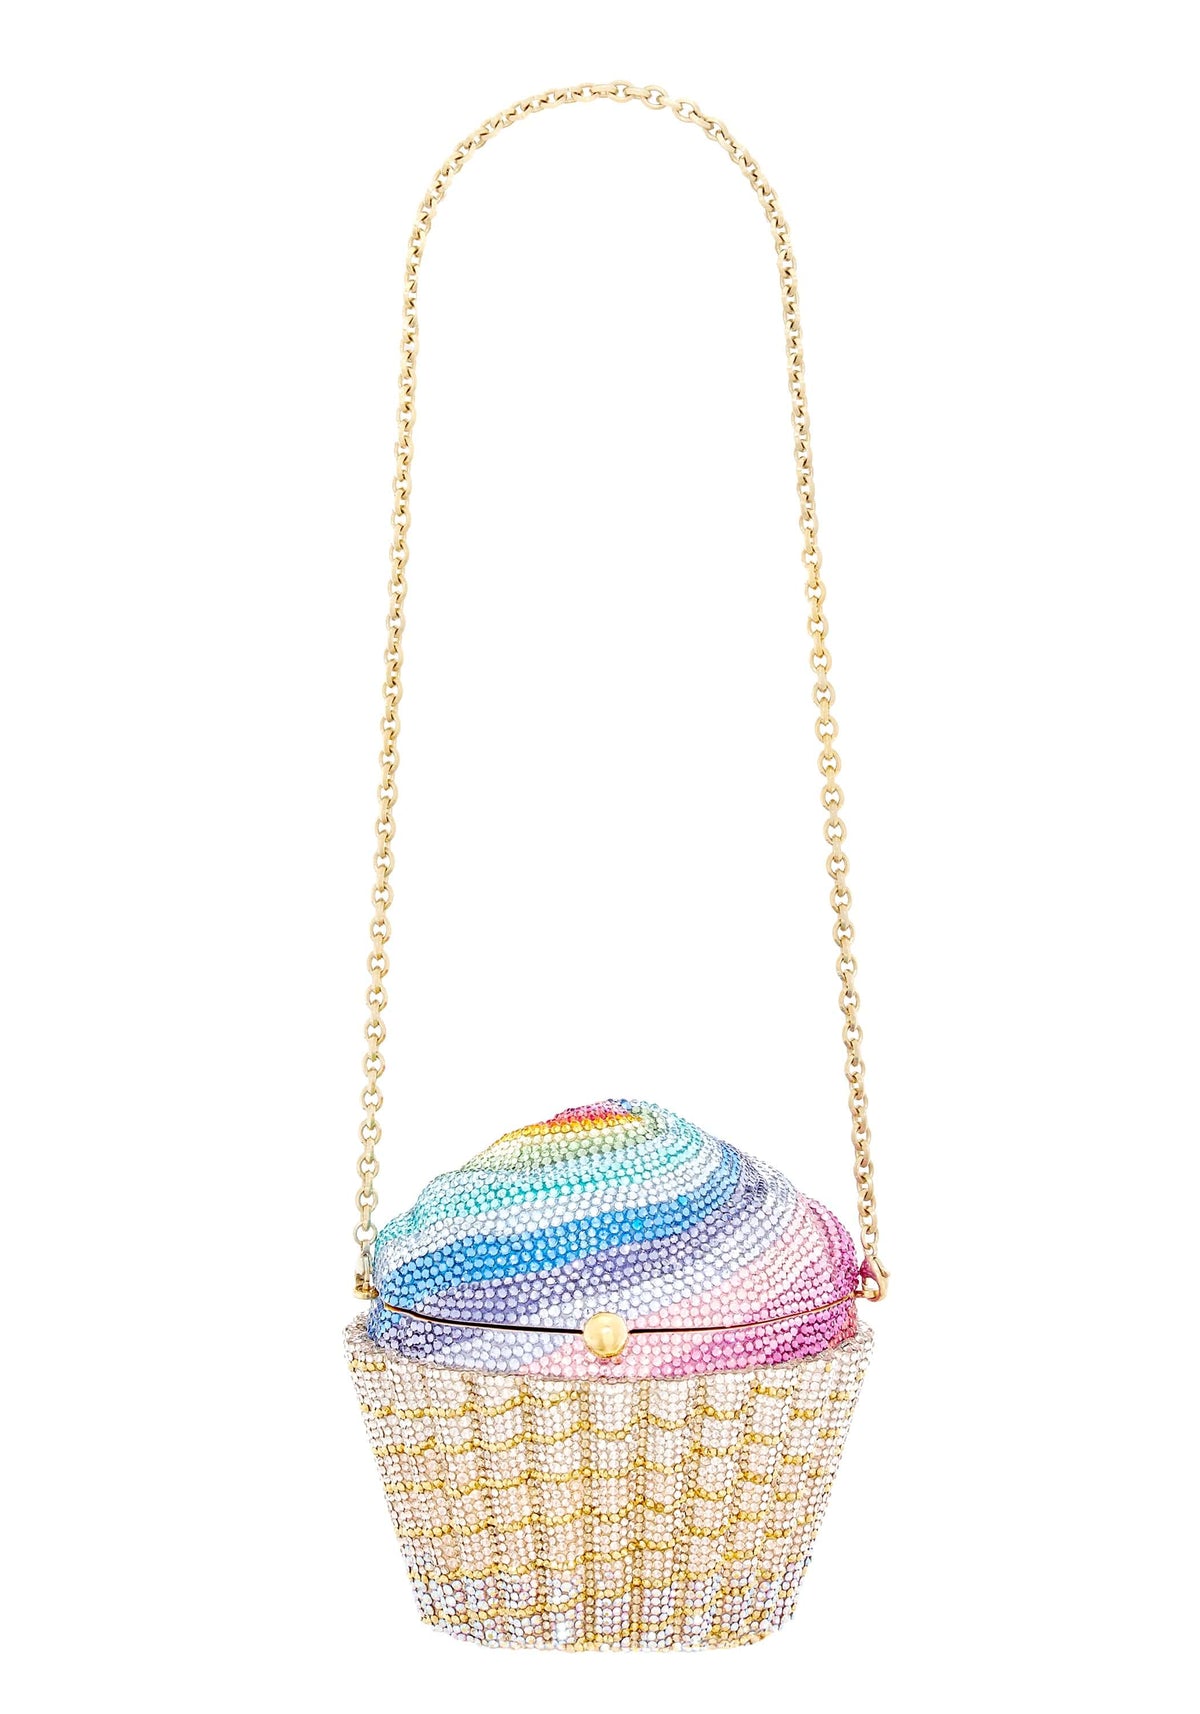 Judith Leiber Couture Cupcake Rainbow Clutch Bag, Multicolor